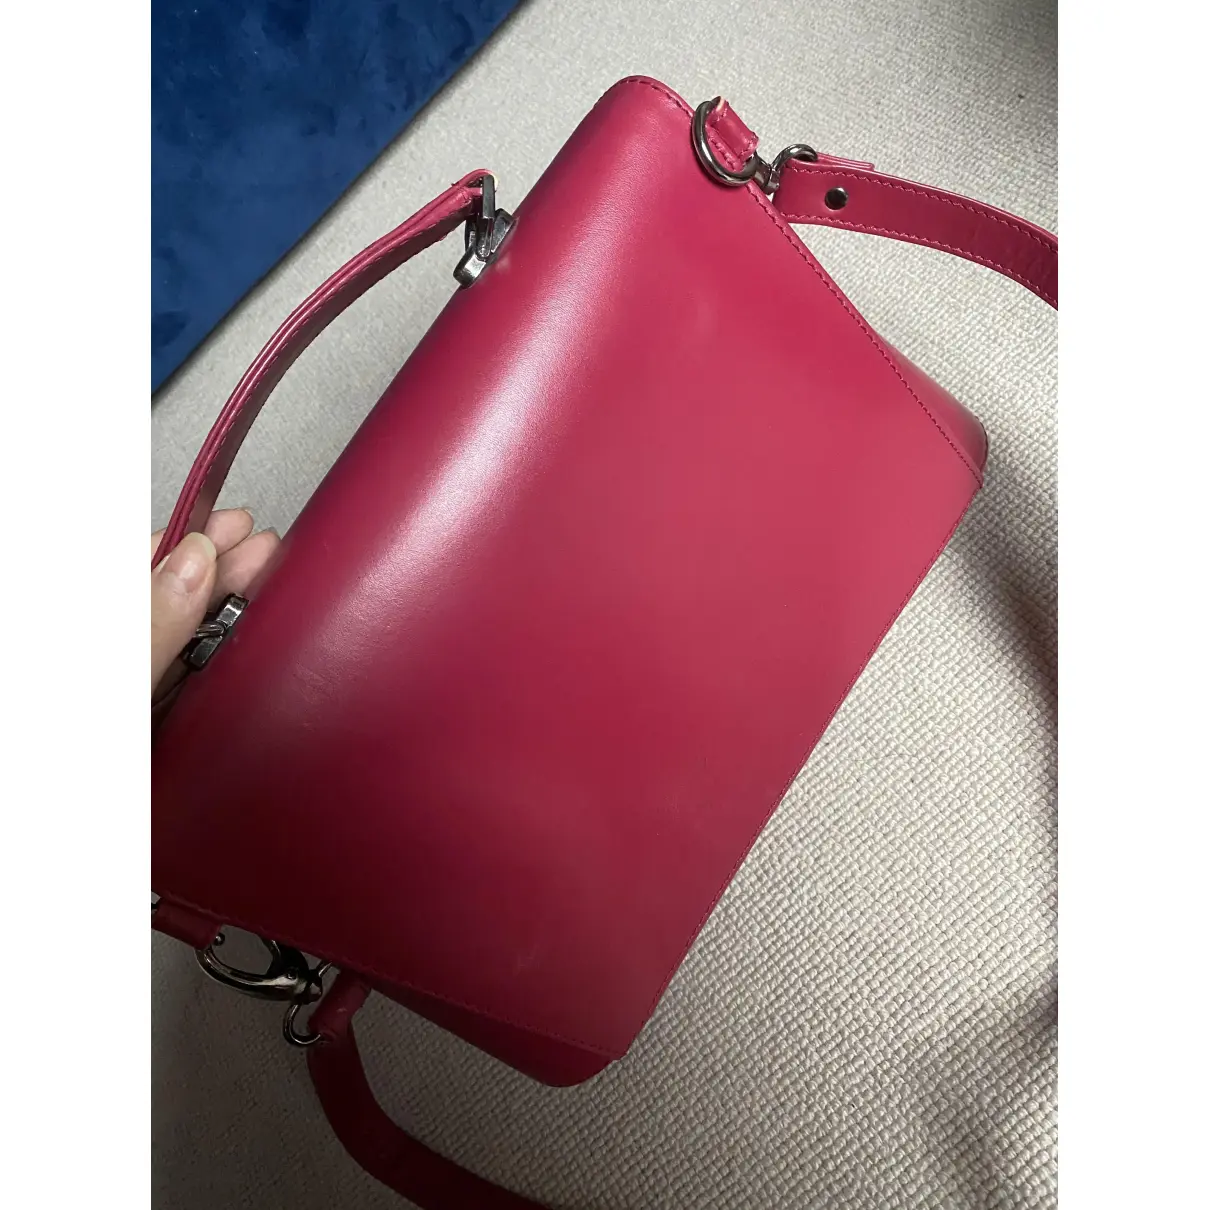 Buy Reiss Leather handbag online